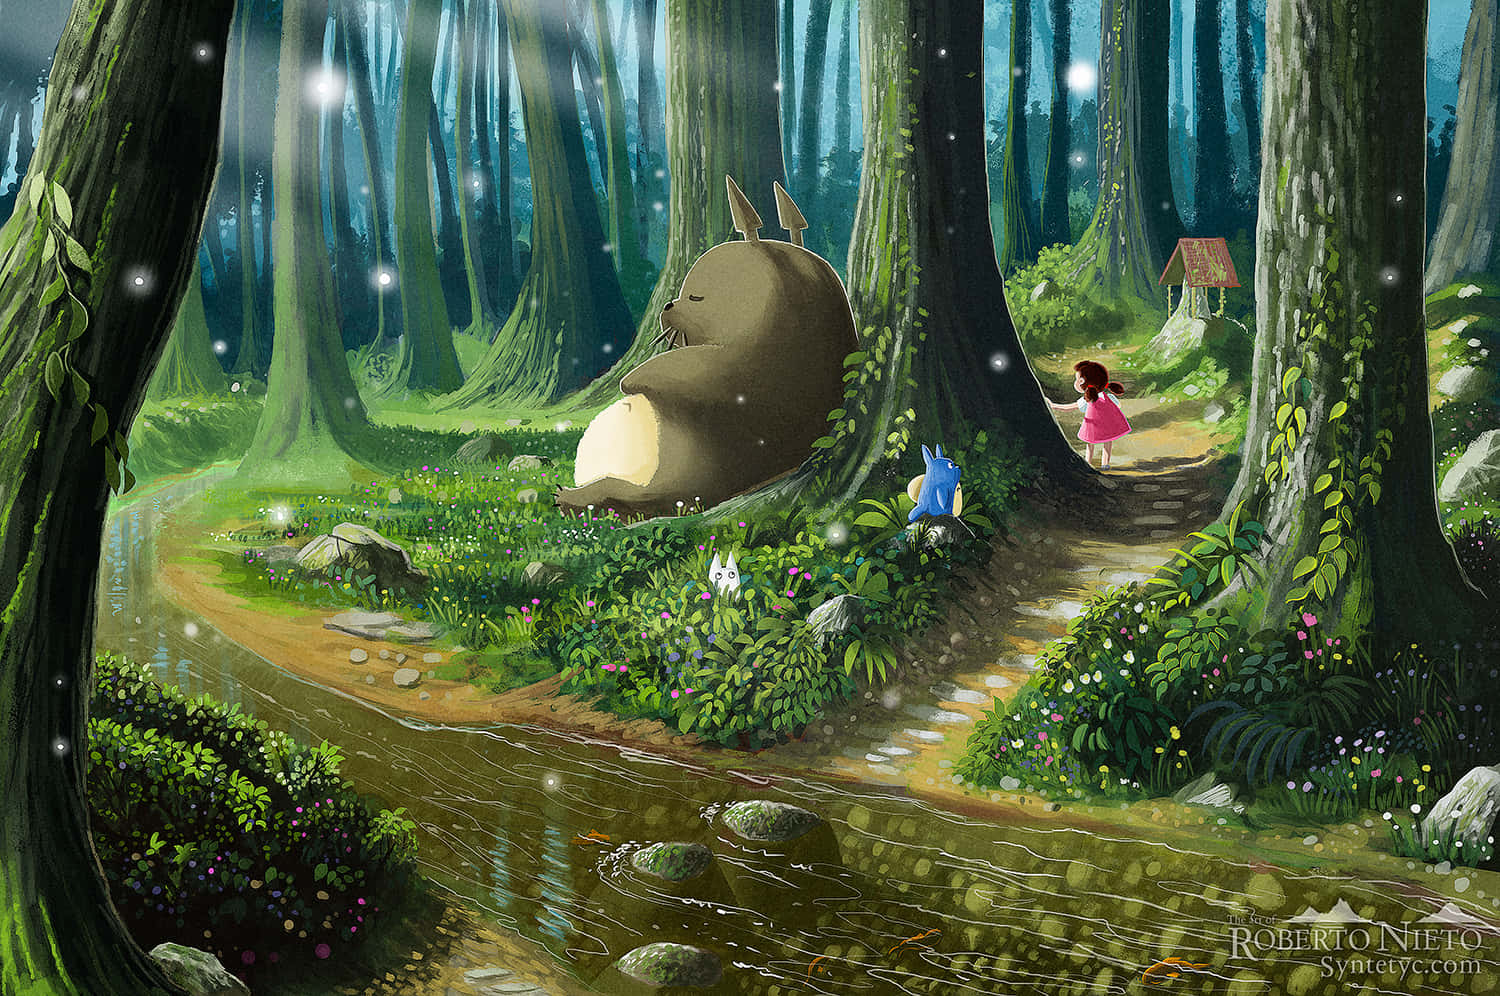 Enjoy life's little wonders with Totoro